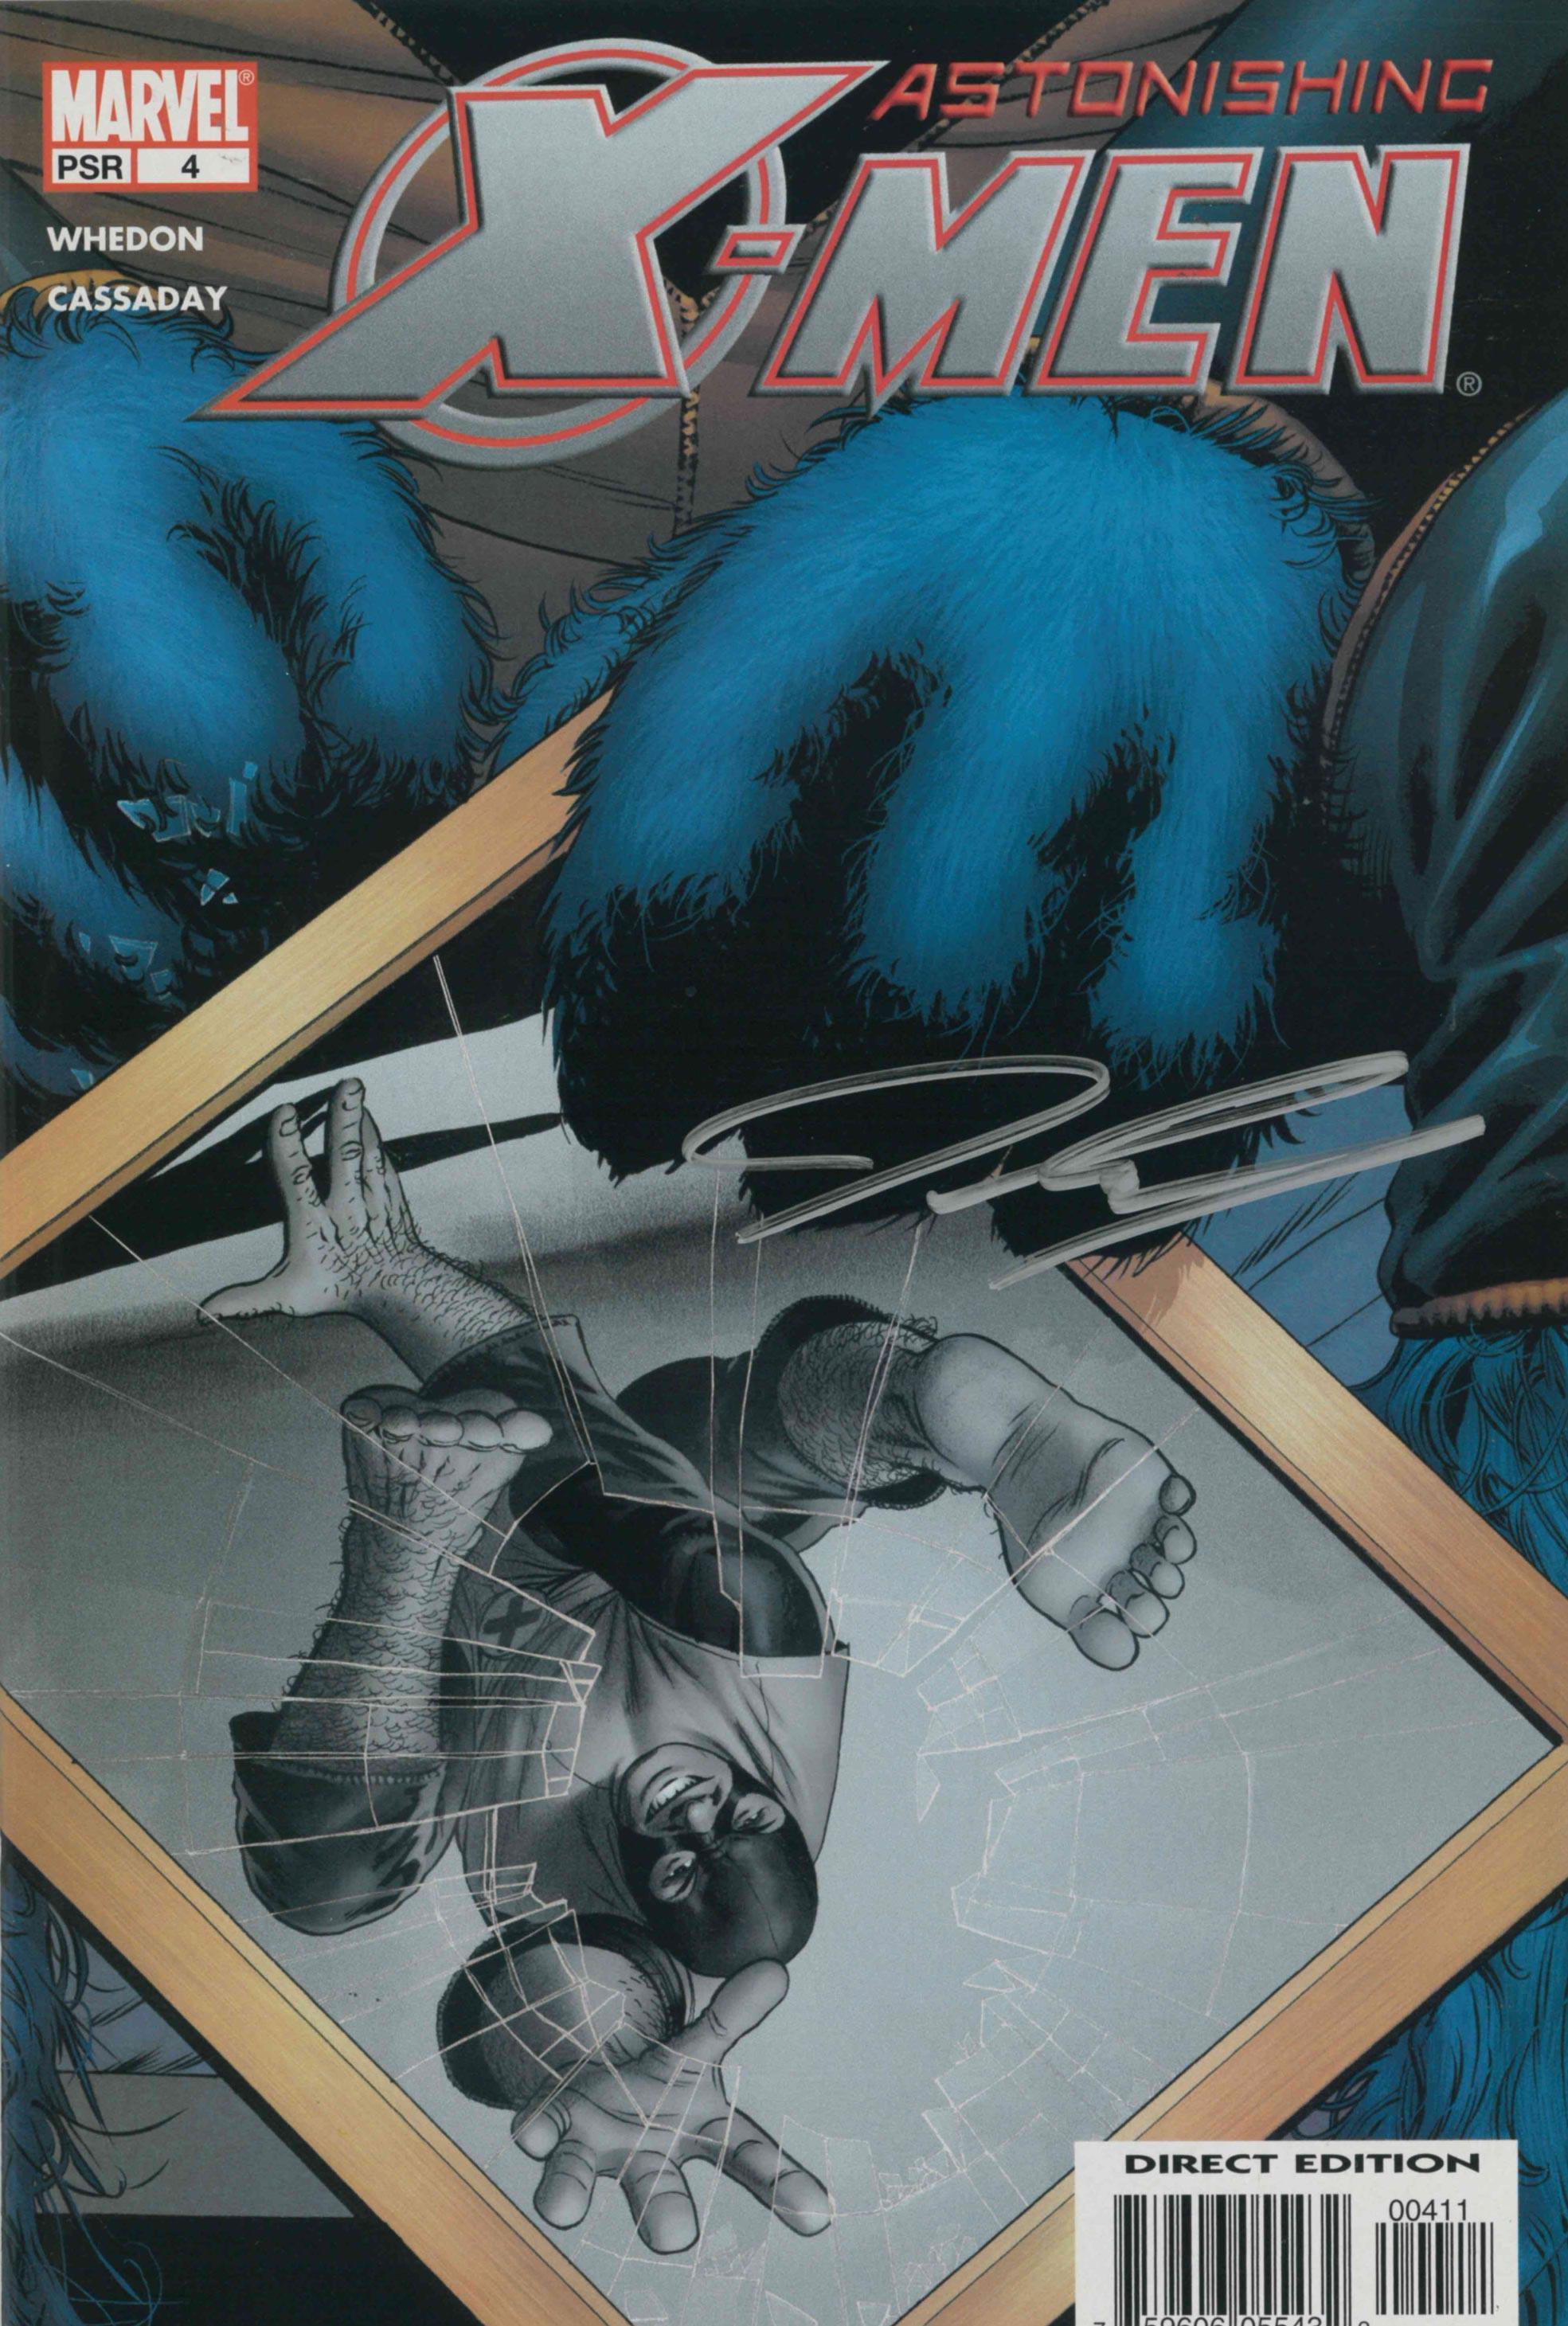 ASTONISHING X-MEN VOL 3 #4 - SIGNED BY JOHN CASSADAY - Kings Comics